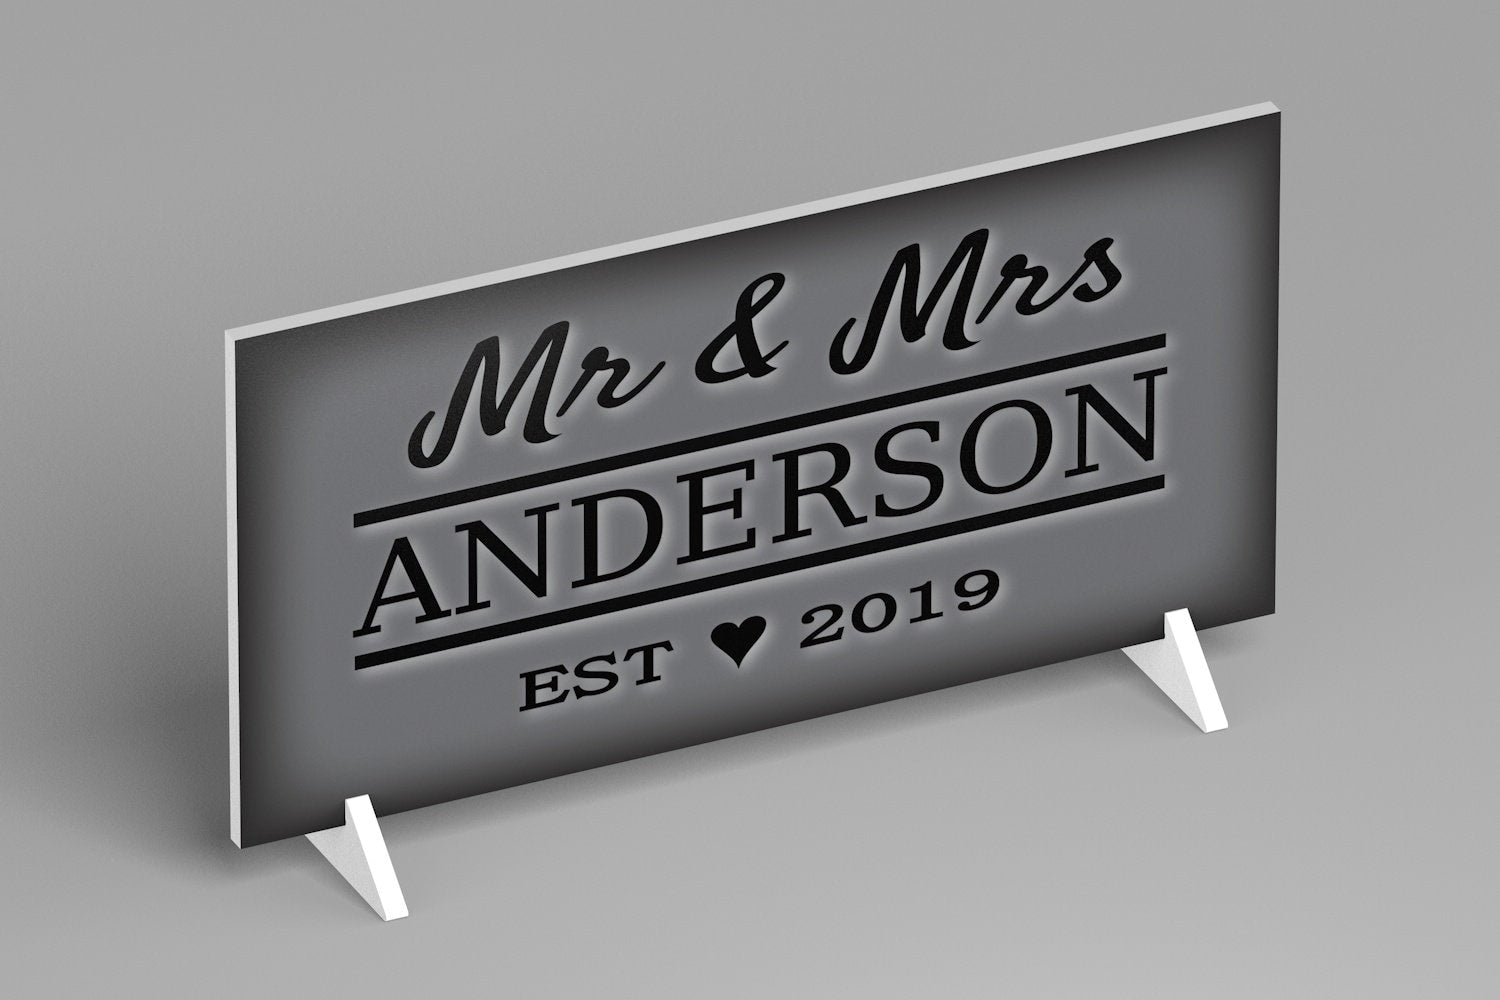 Personalized Wedding Gift For Couple, Established Wedding Sign, Mr & Mrs Wedding Sign, Bridal Shower Gift, Wedding Plaque, Wedding Decor